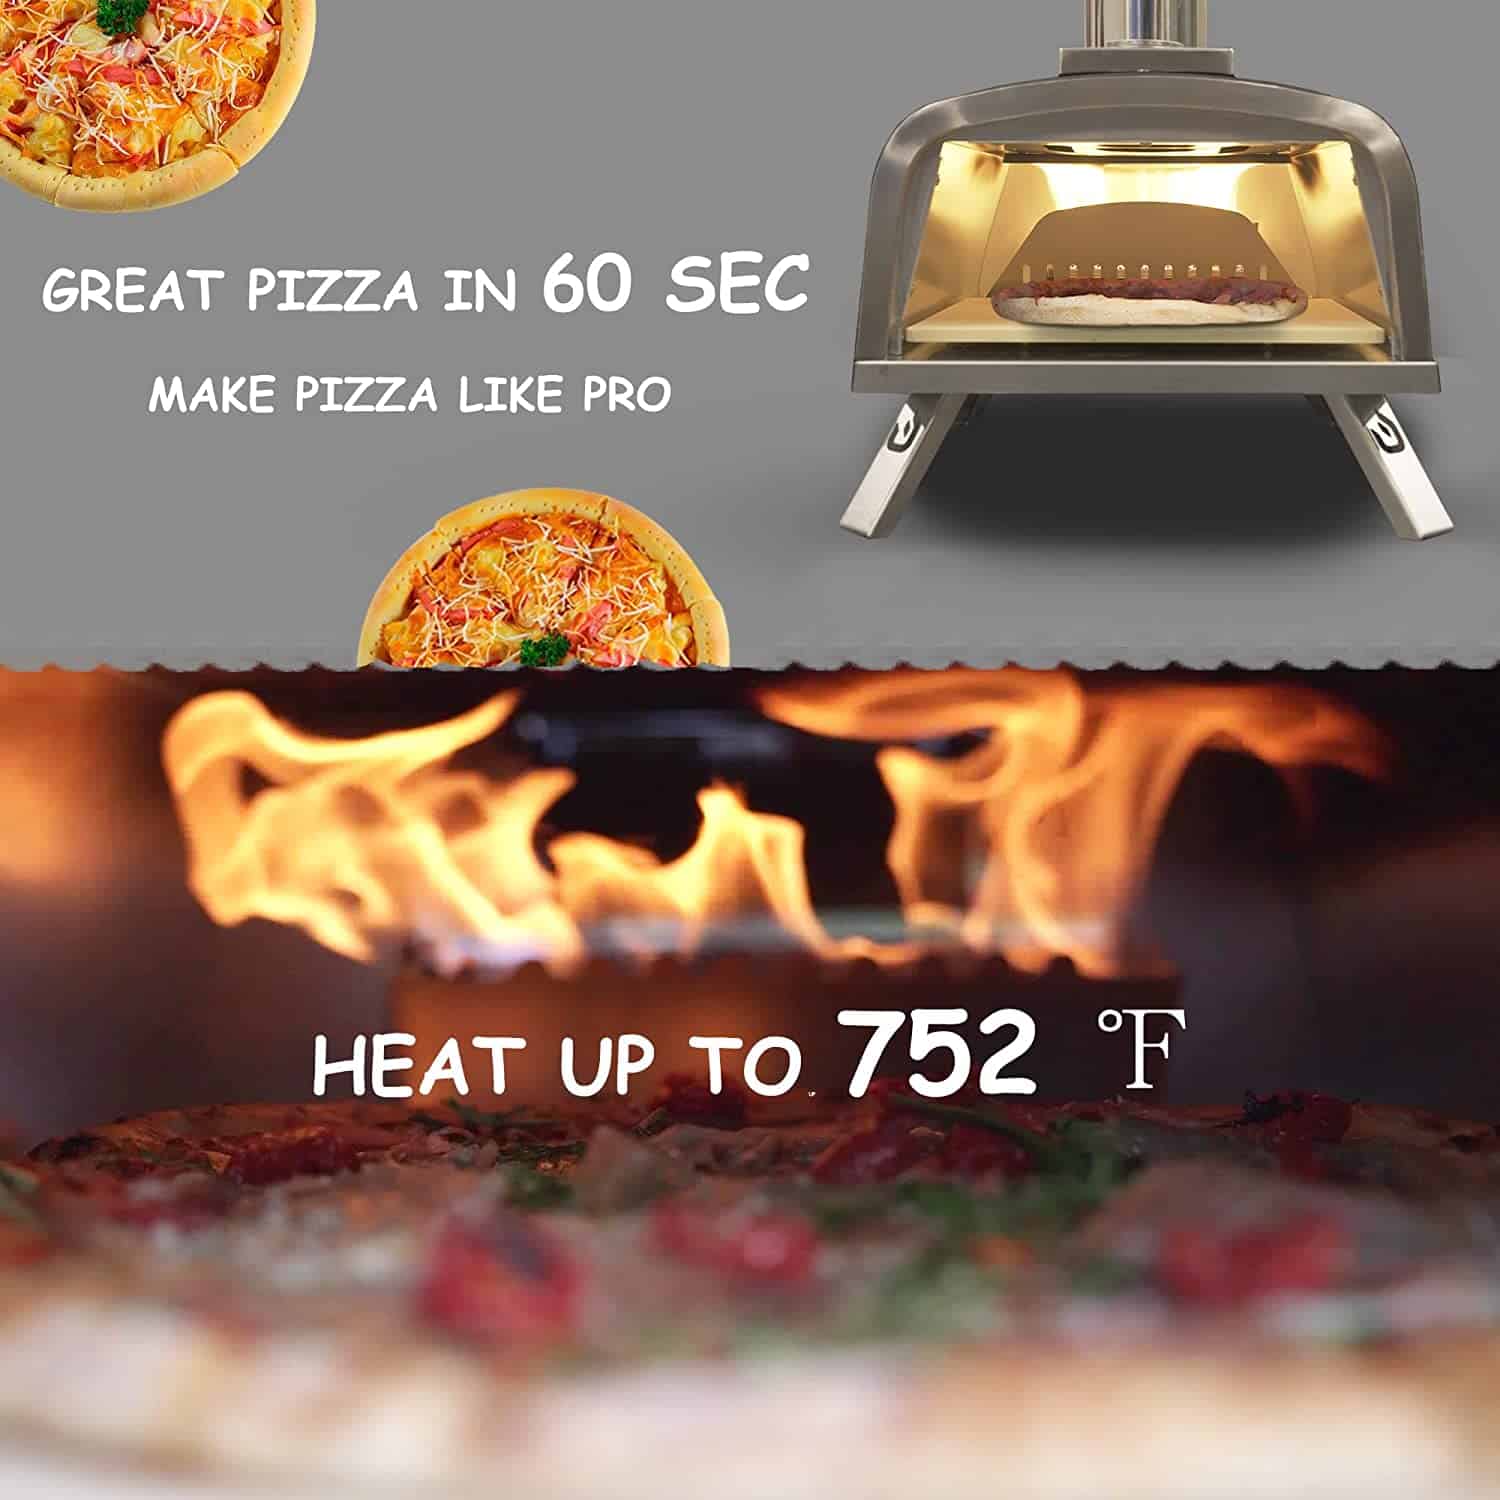 Pizzello pizza oven